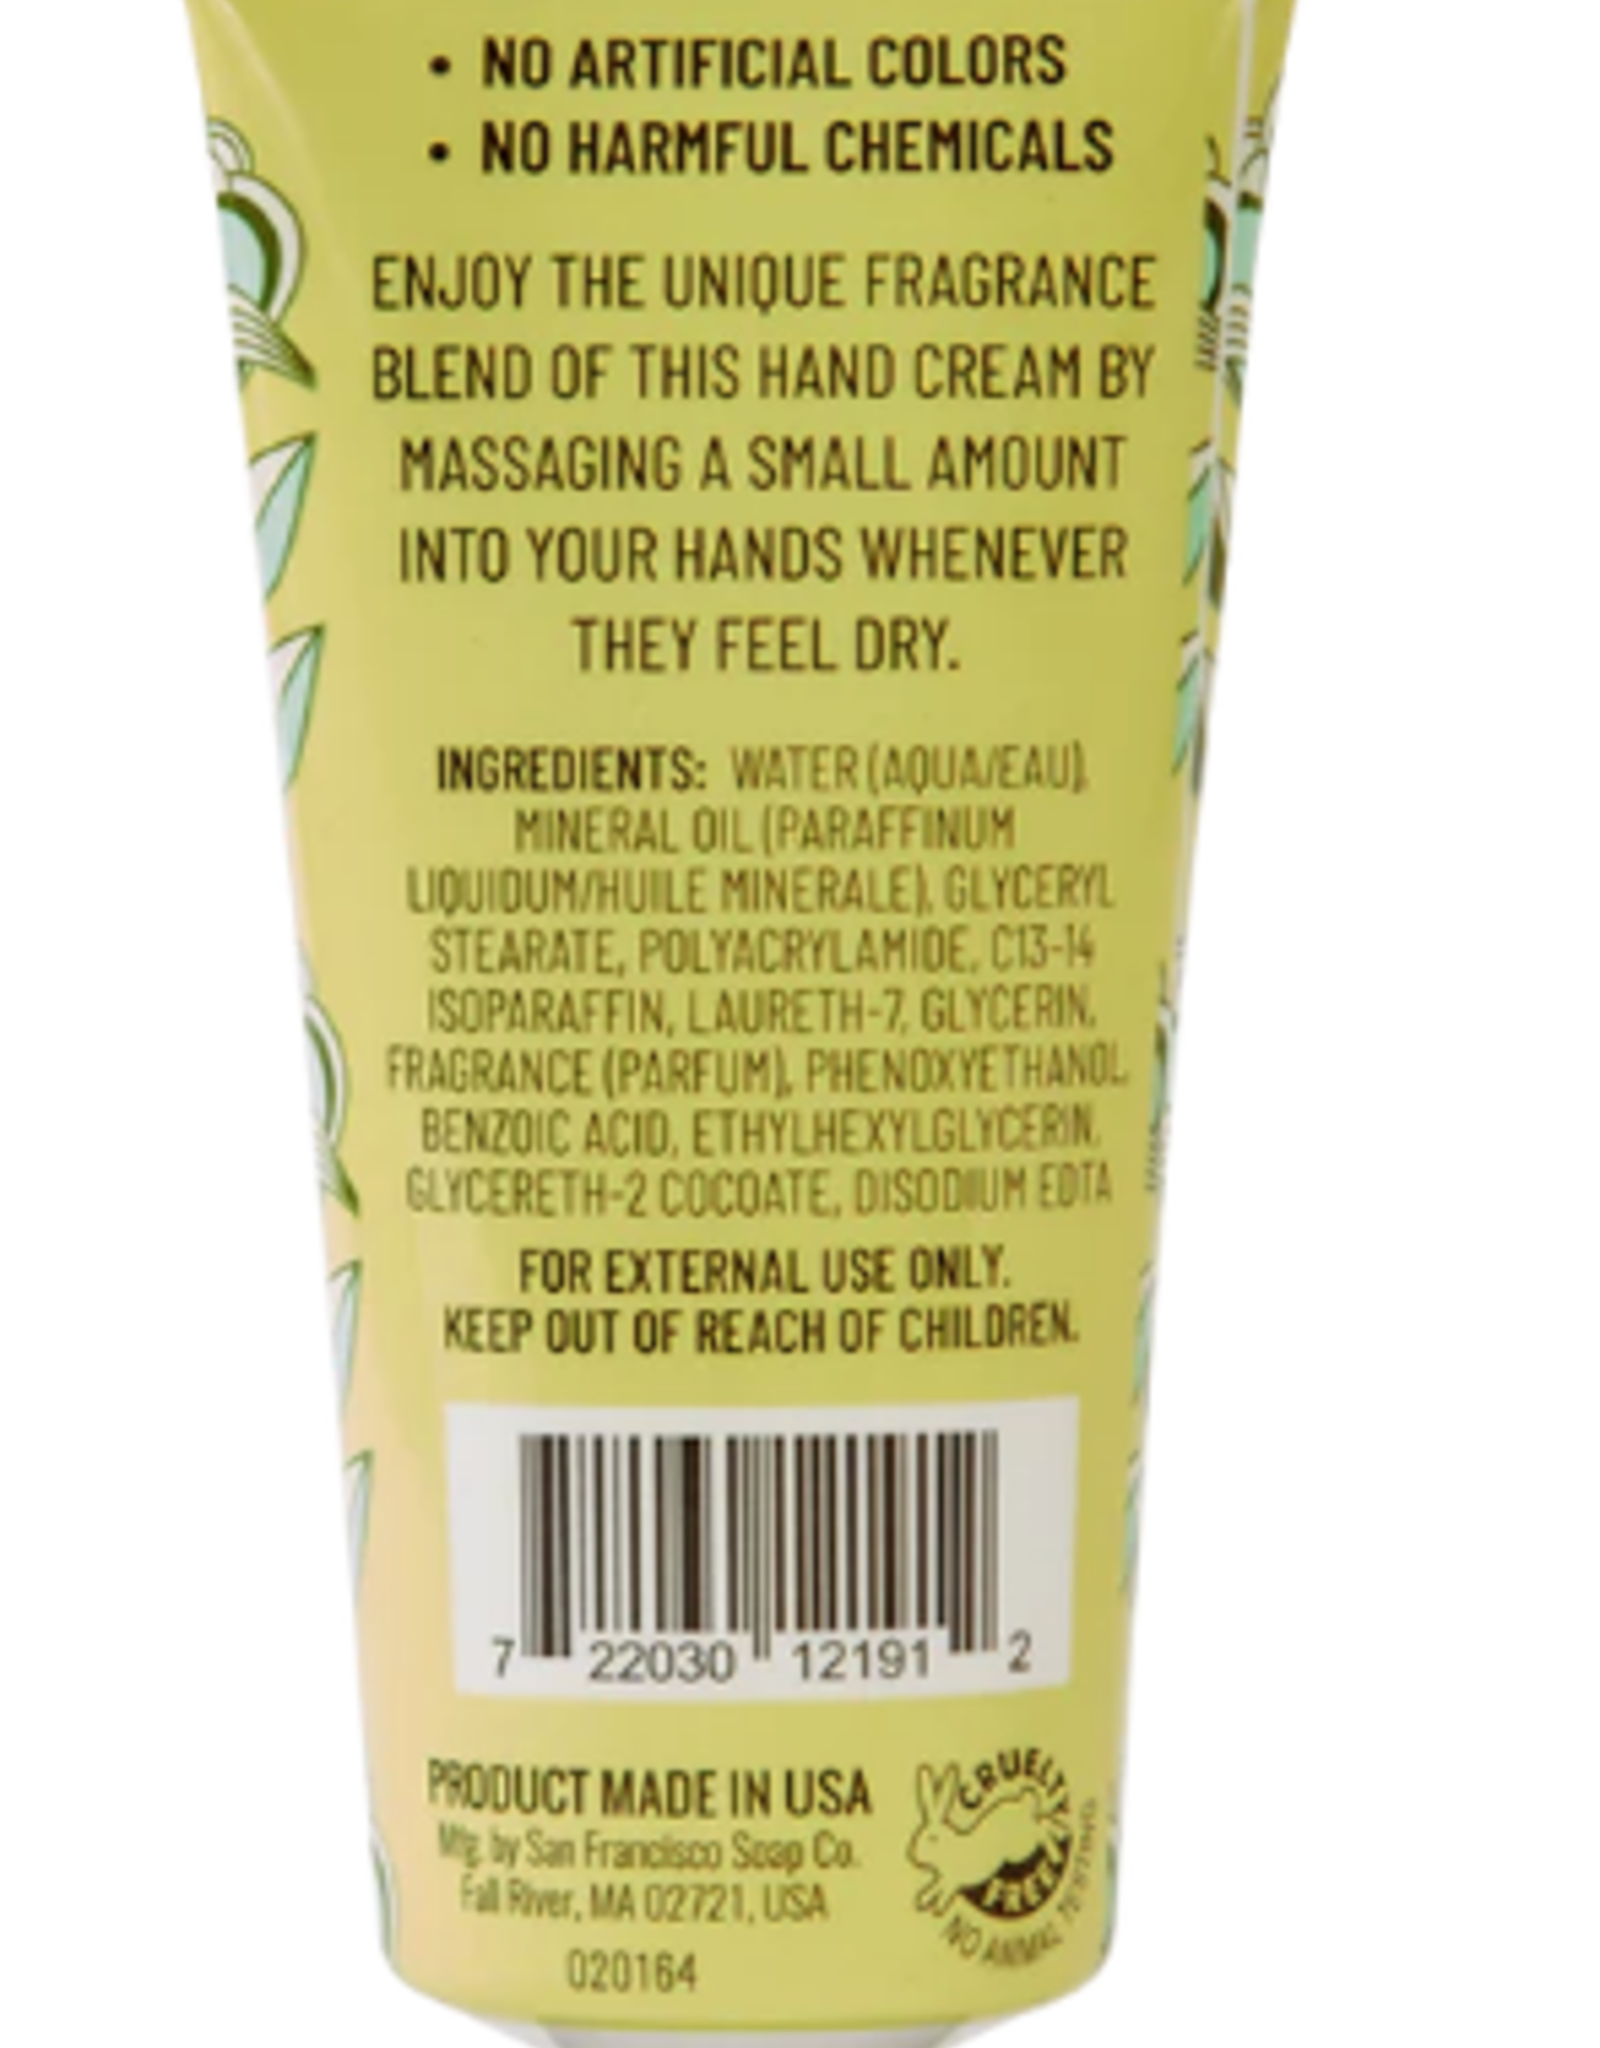 Tuberose & Bergamot Scented Botanical Hand Cream 1.5 fl oz